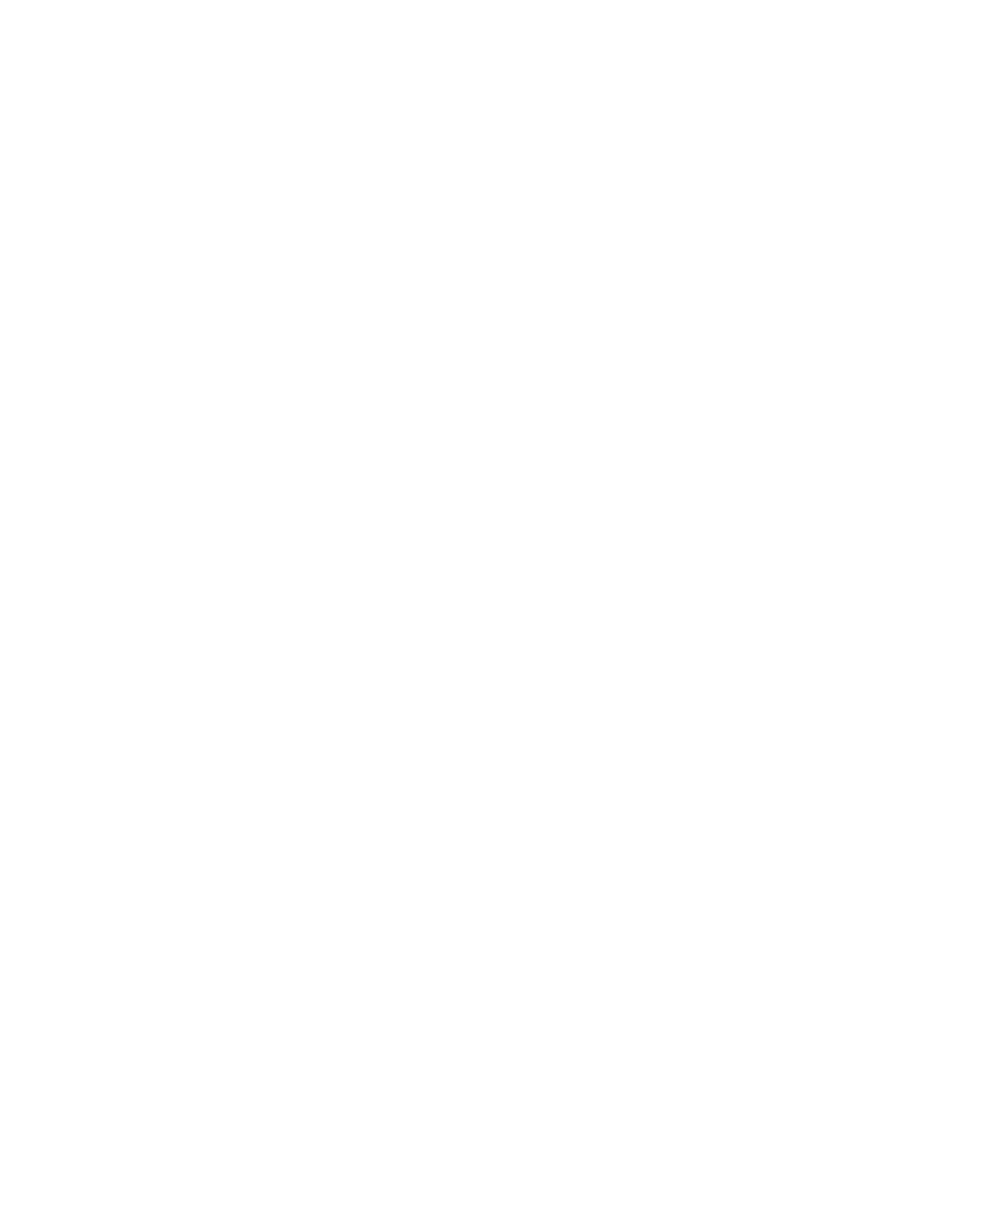 Tracery